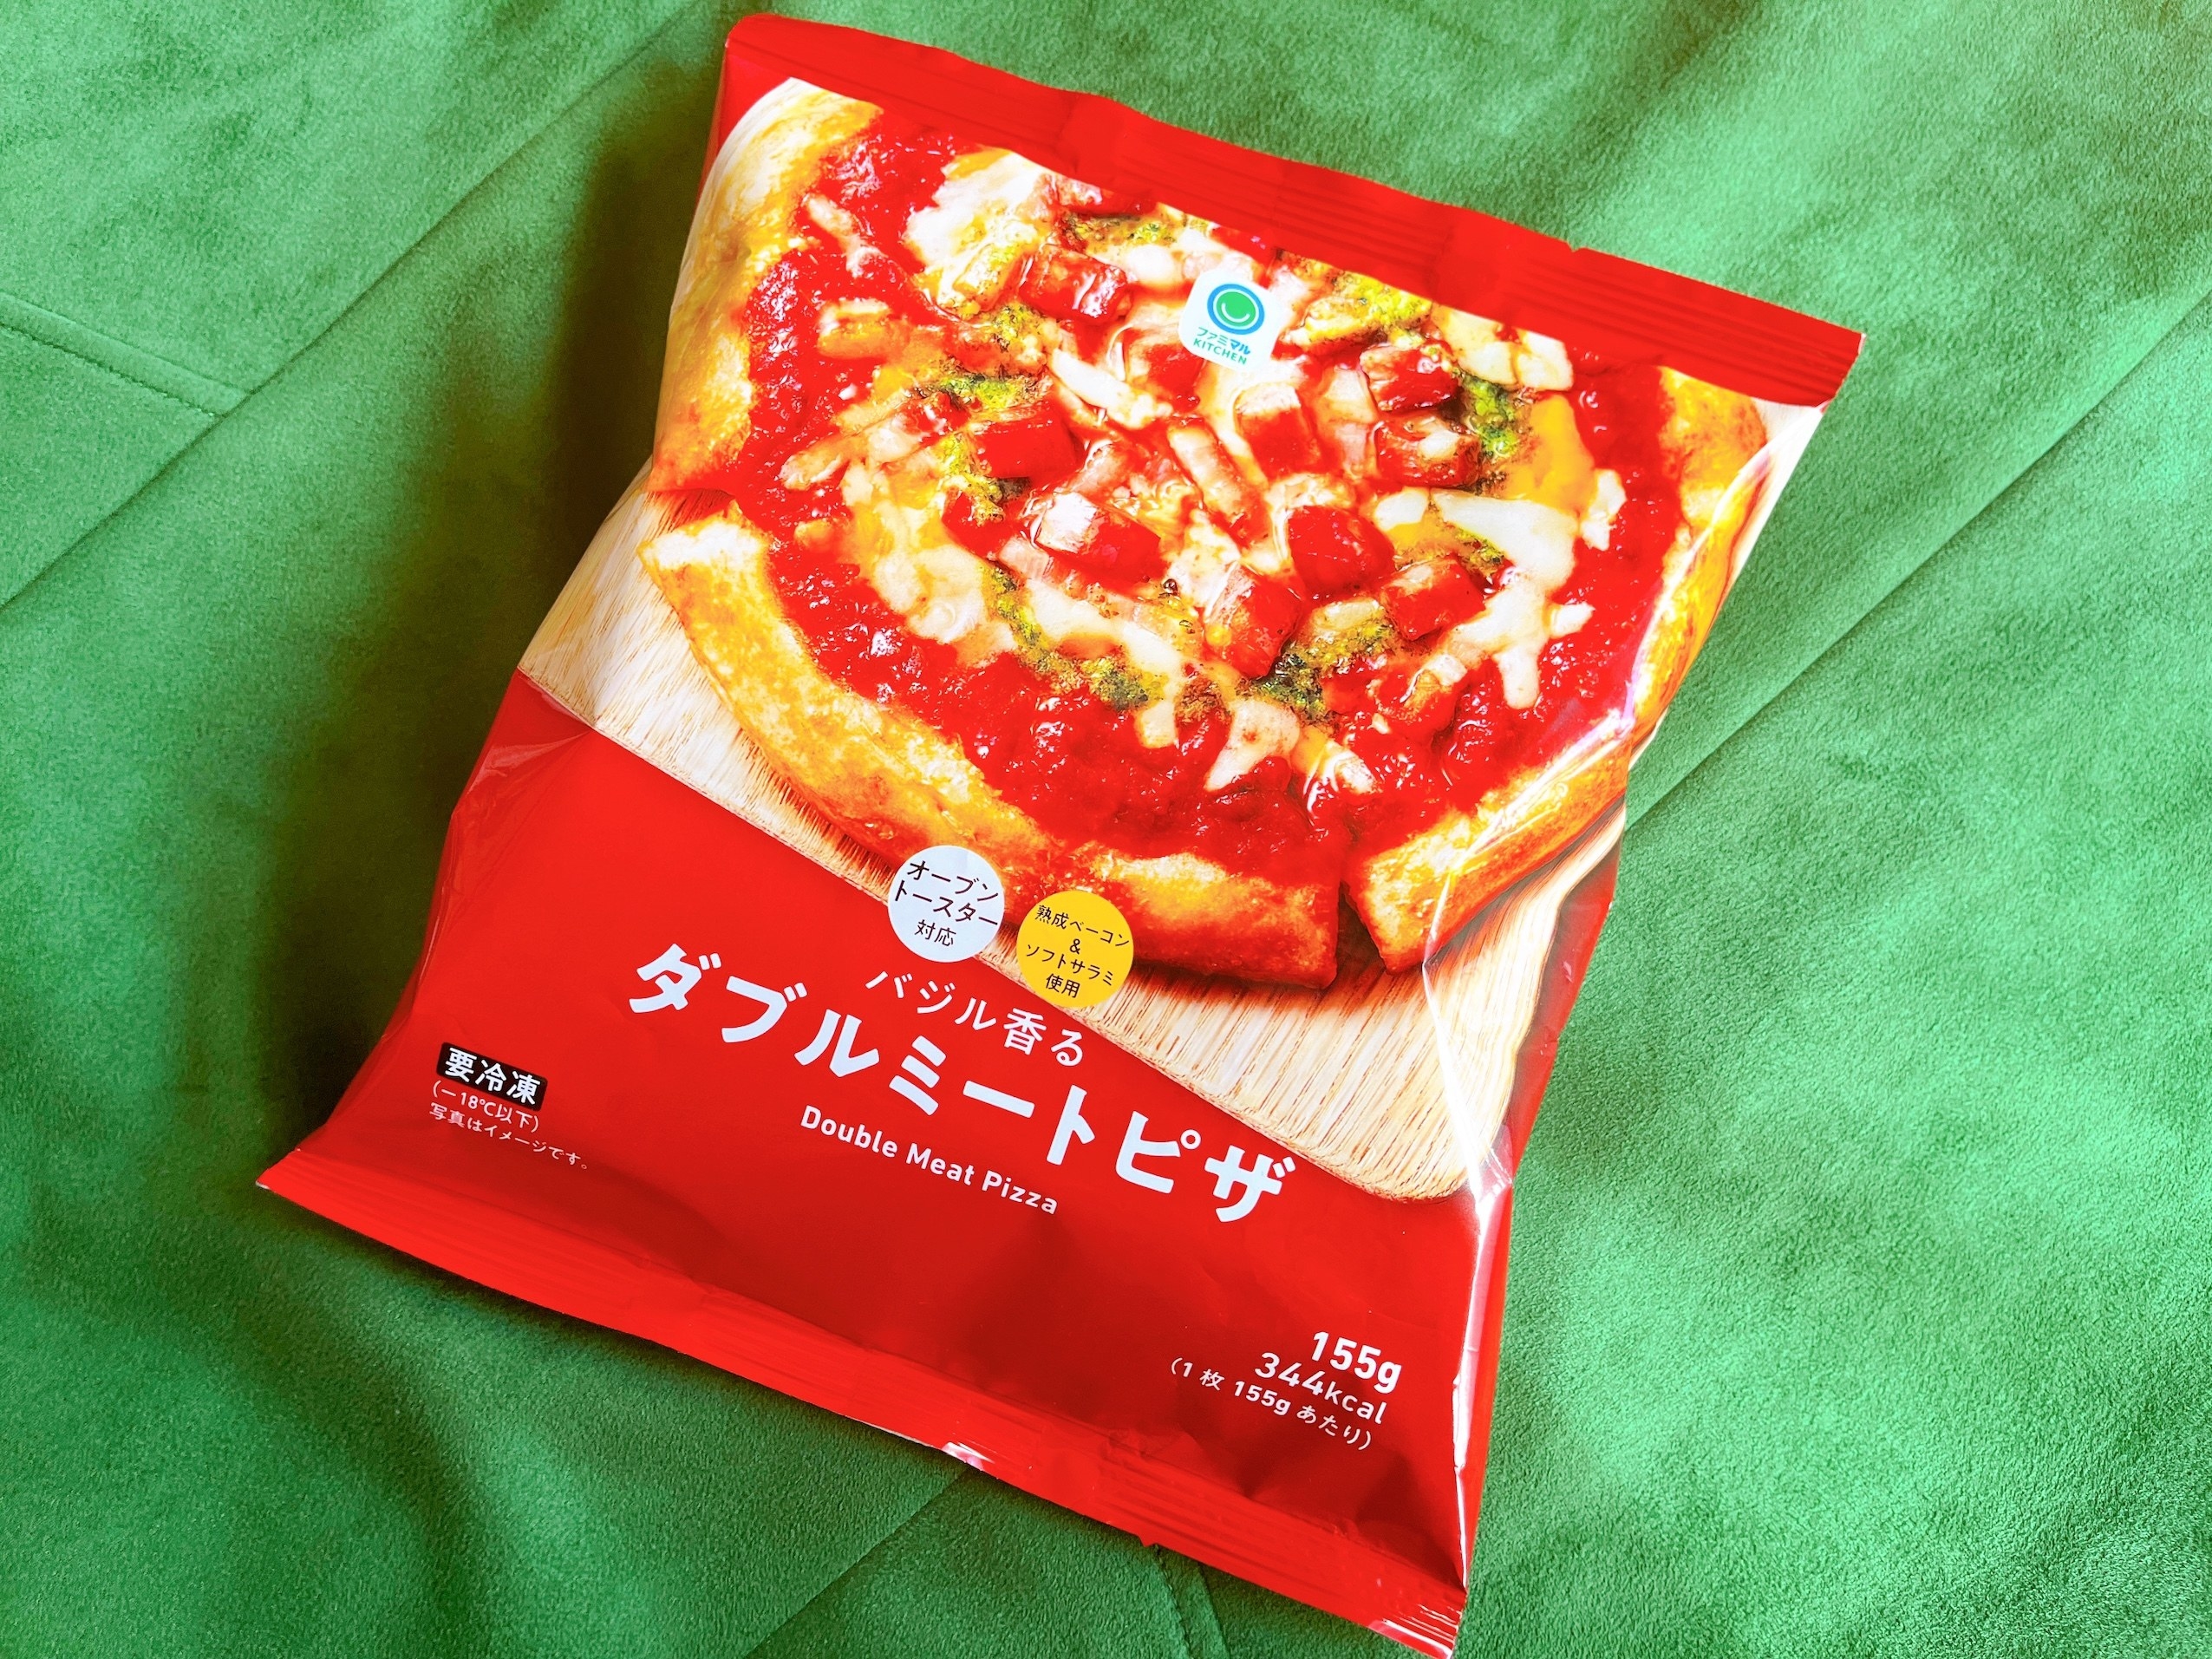 FamilyMart（ファミリーマート）のオススメのチルド商品「バジル香るダブルミートピザ」